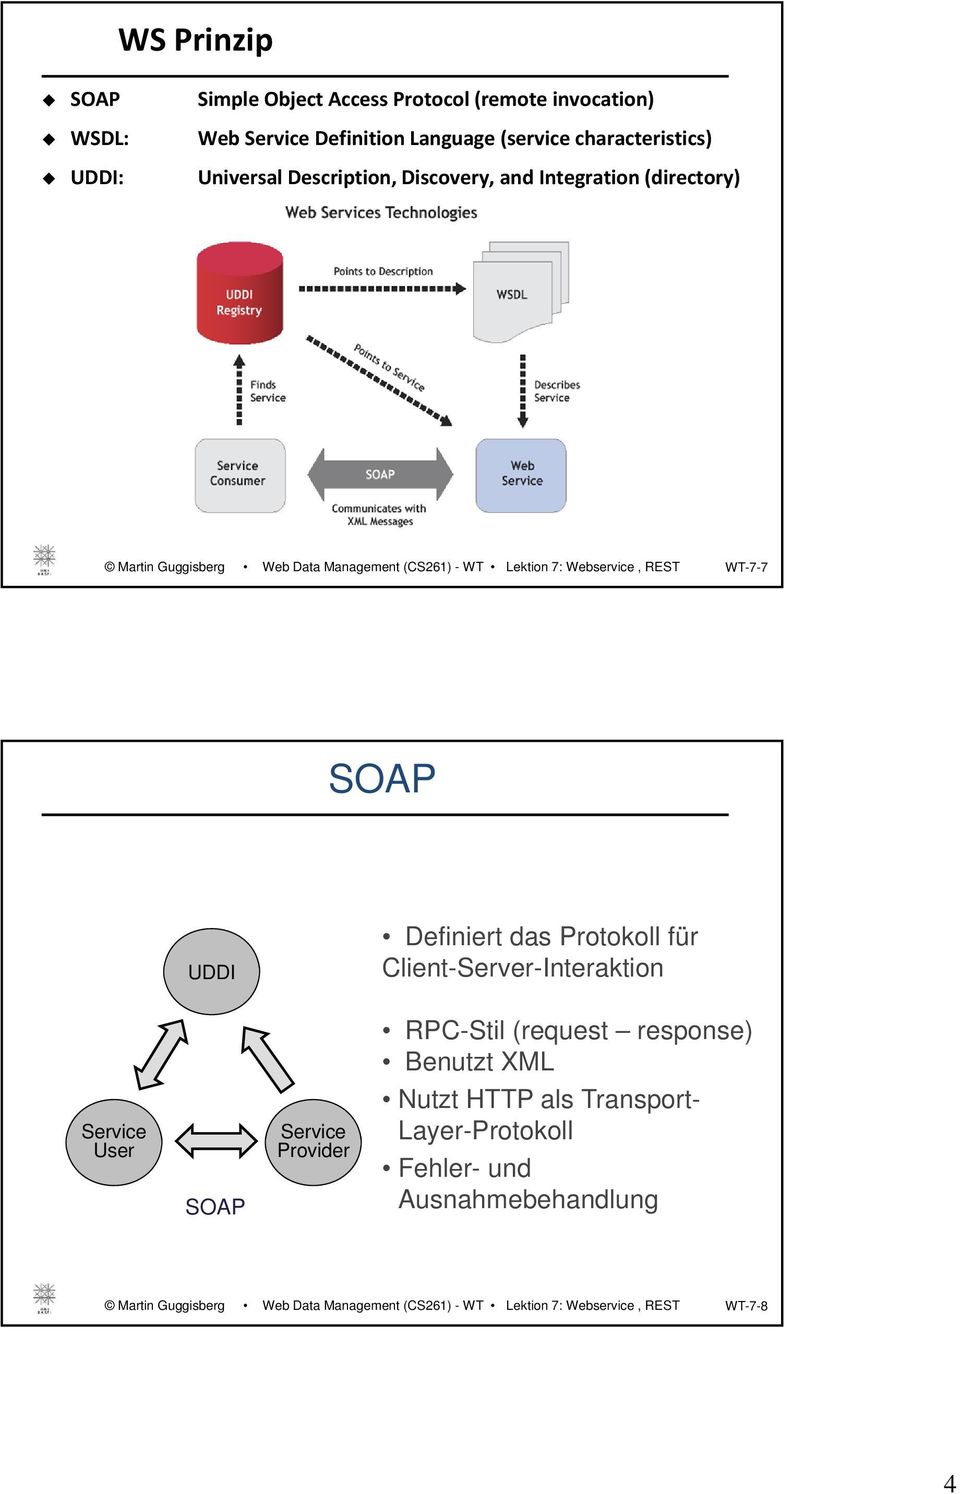 UDDI Definiert das Protokoll für Client-Server-Interaktion Service User SOAP Service Provider RPC-Stil